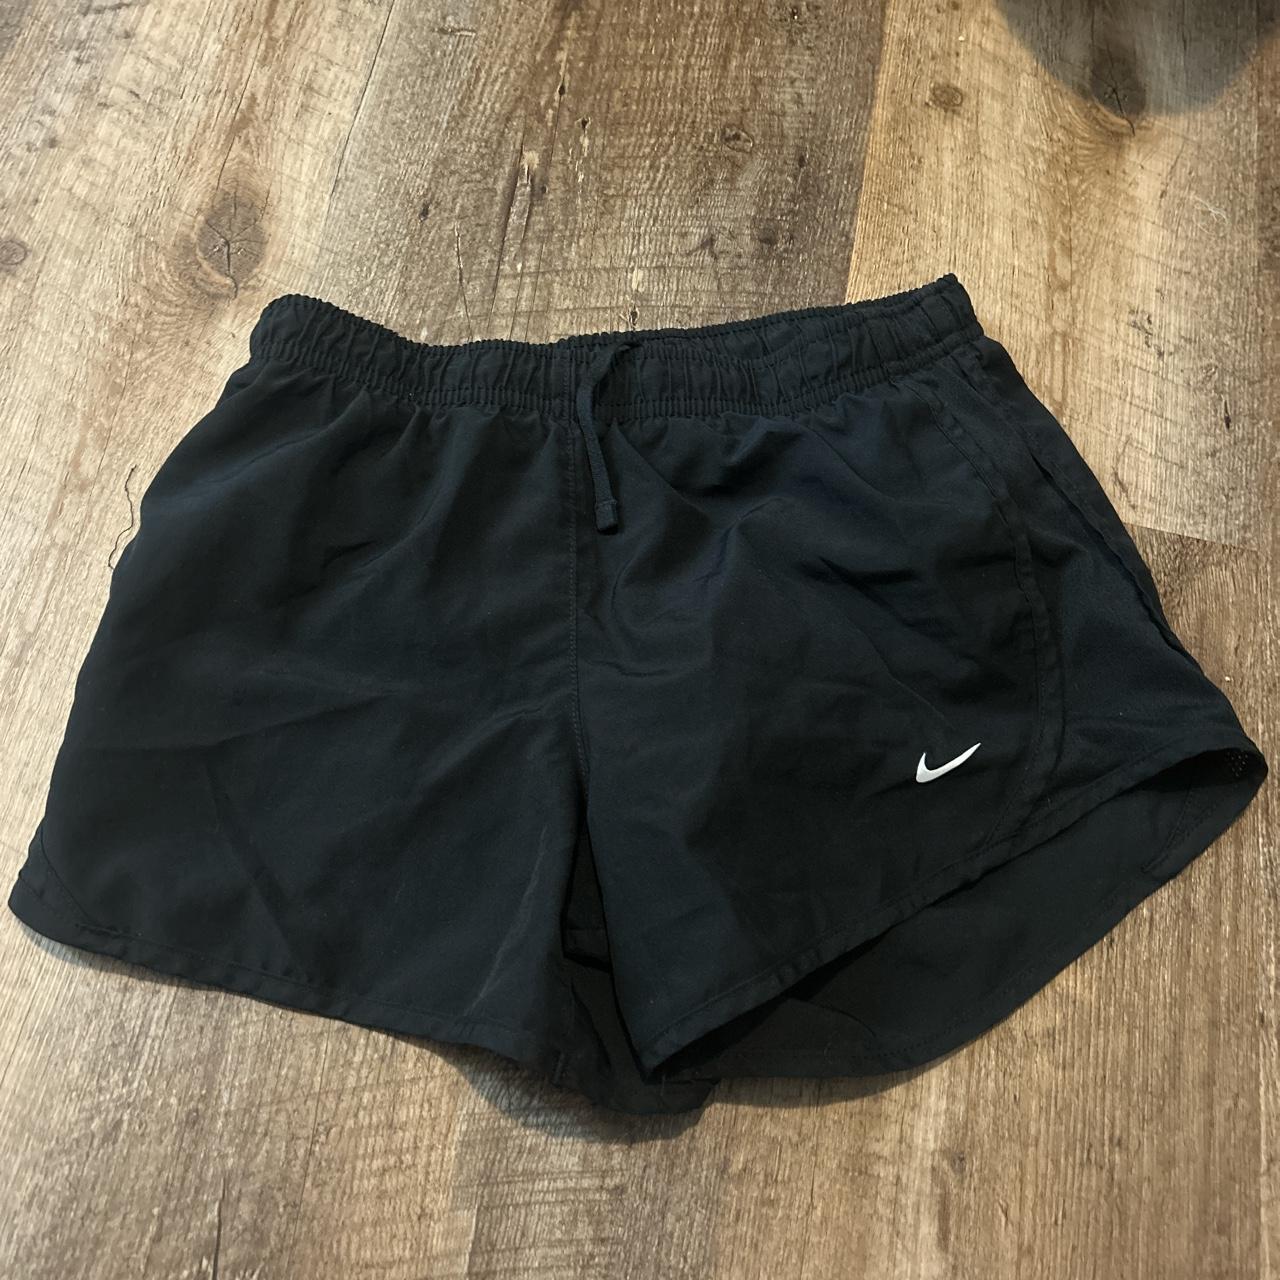 Nike Black Shorts